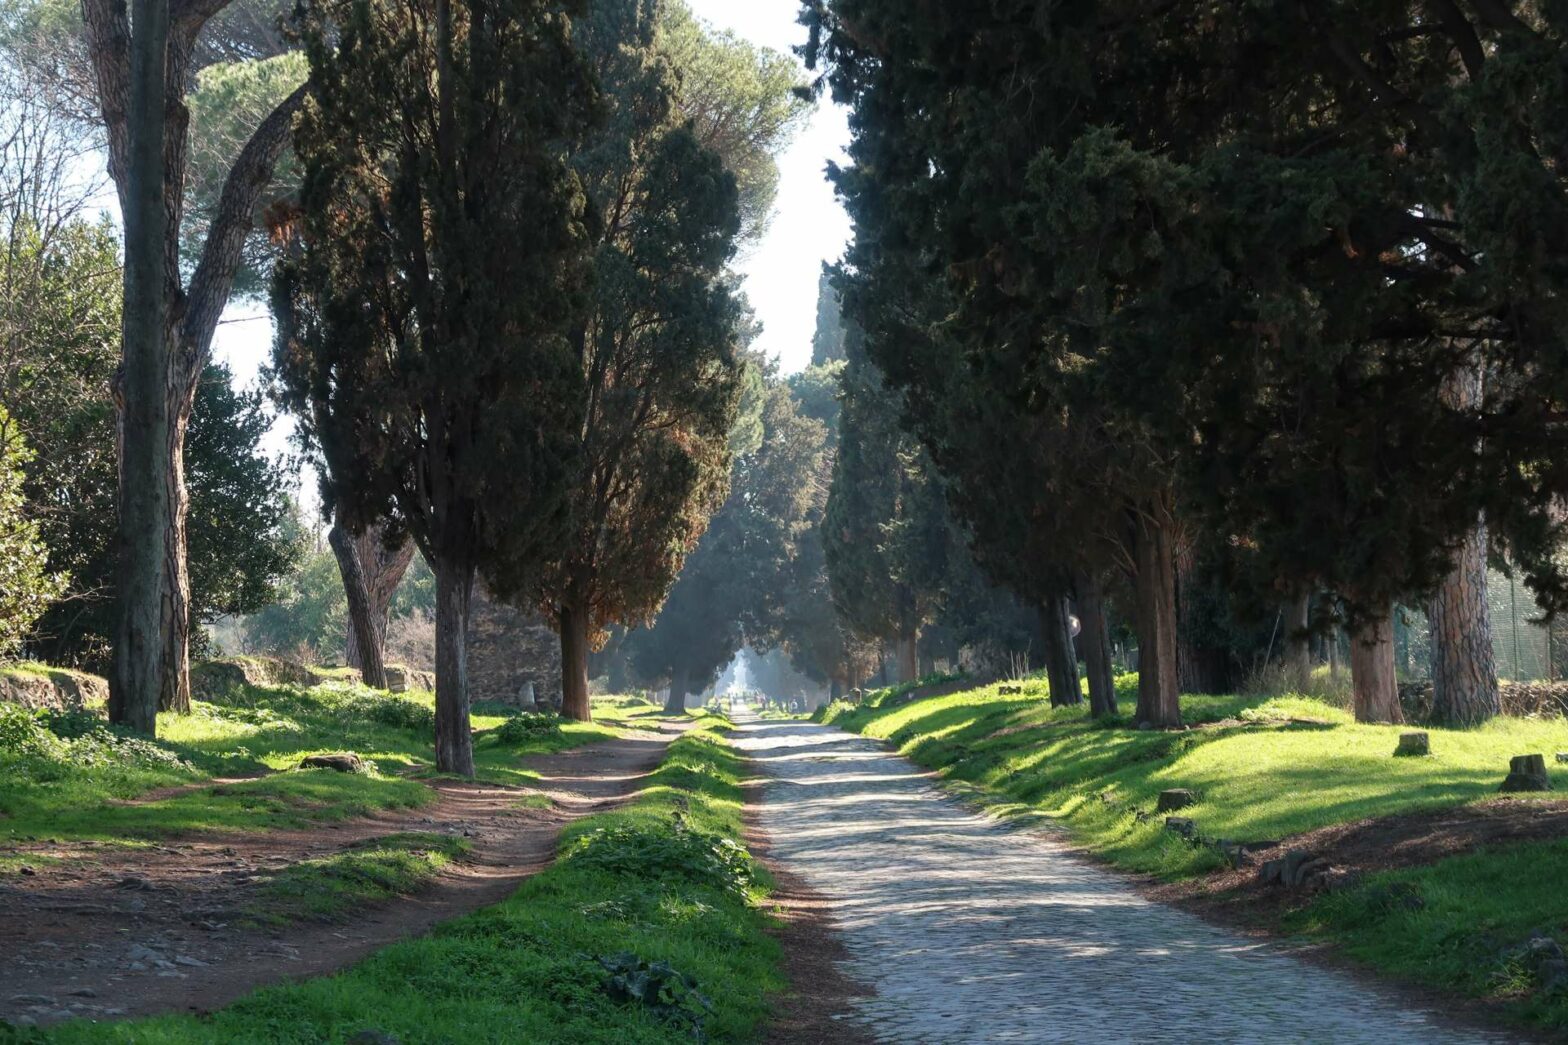 Walking along the Via Appia Antica near Rome